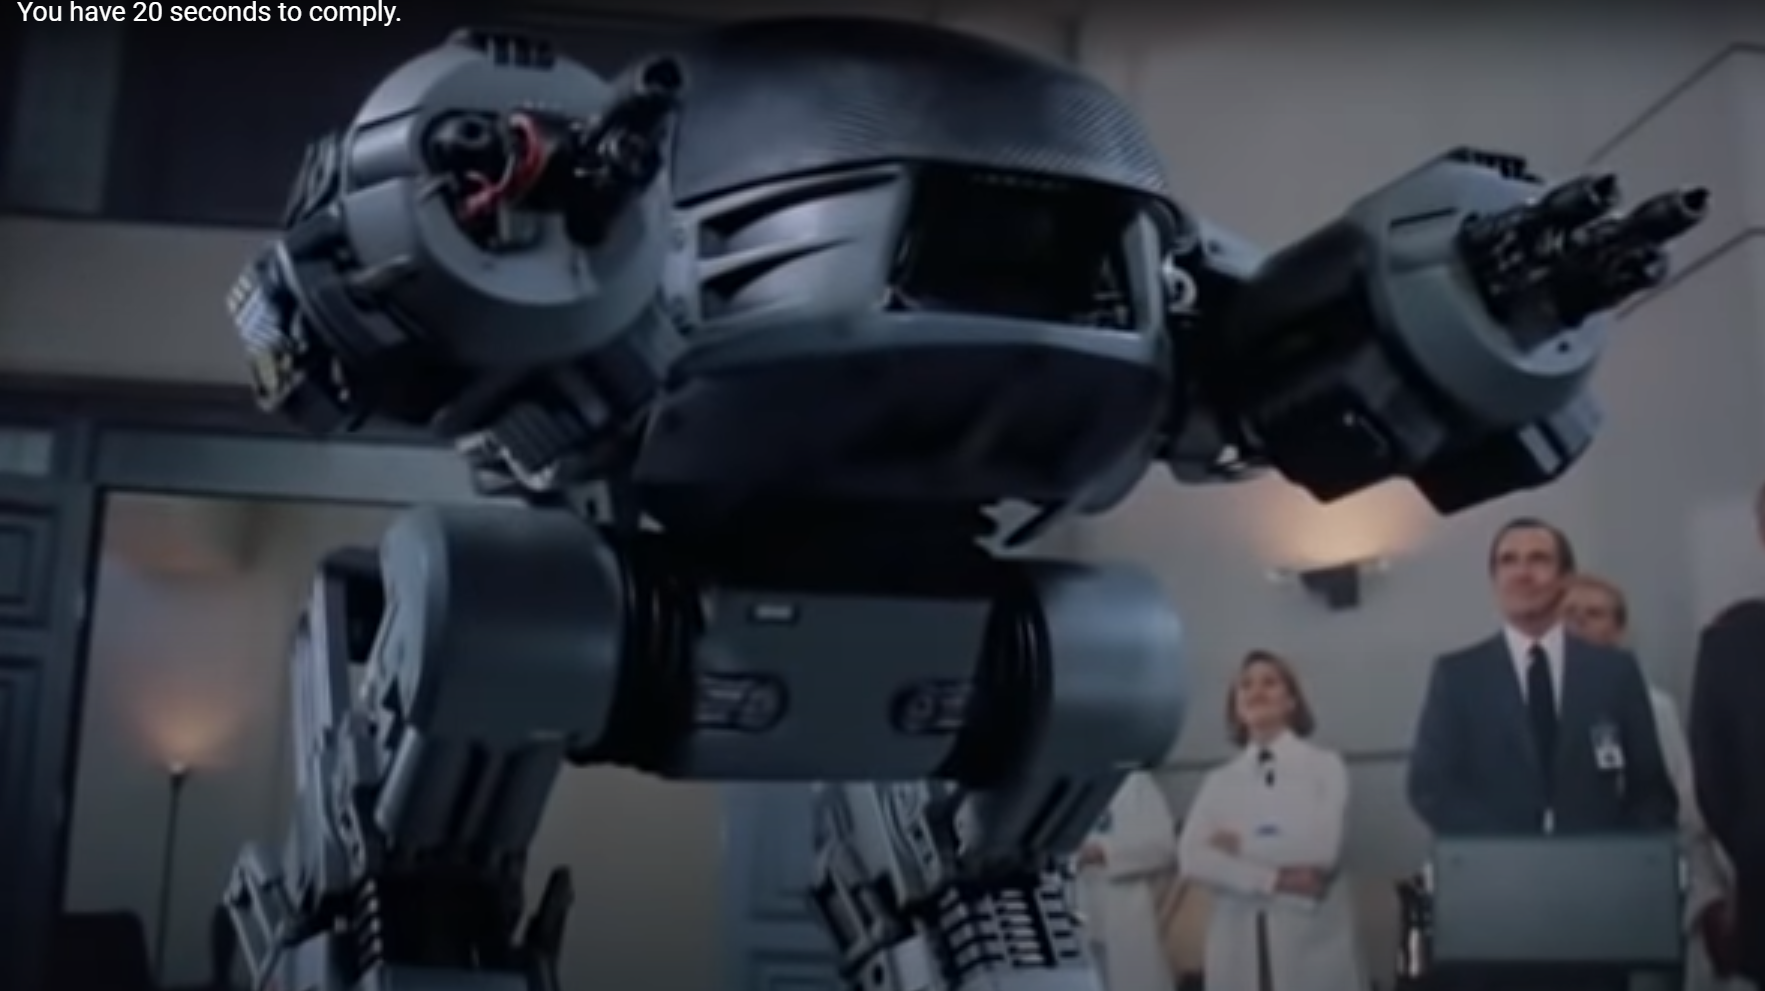 San Francisco Police to get “killer robots”